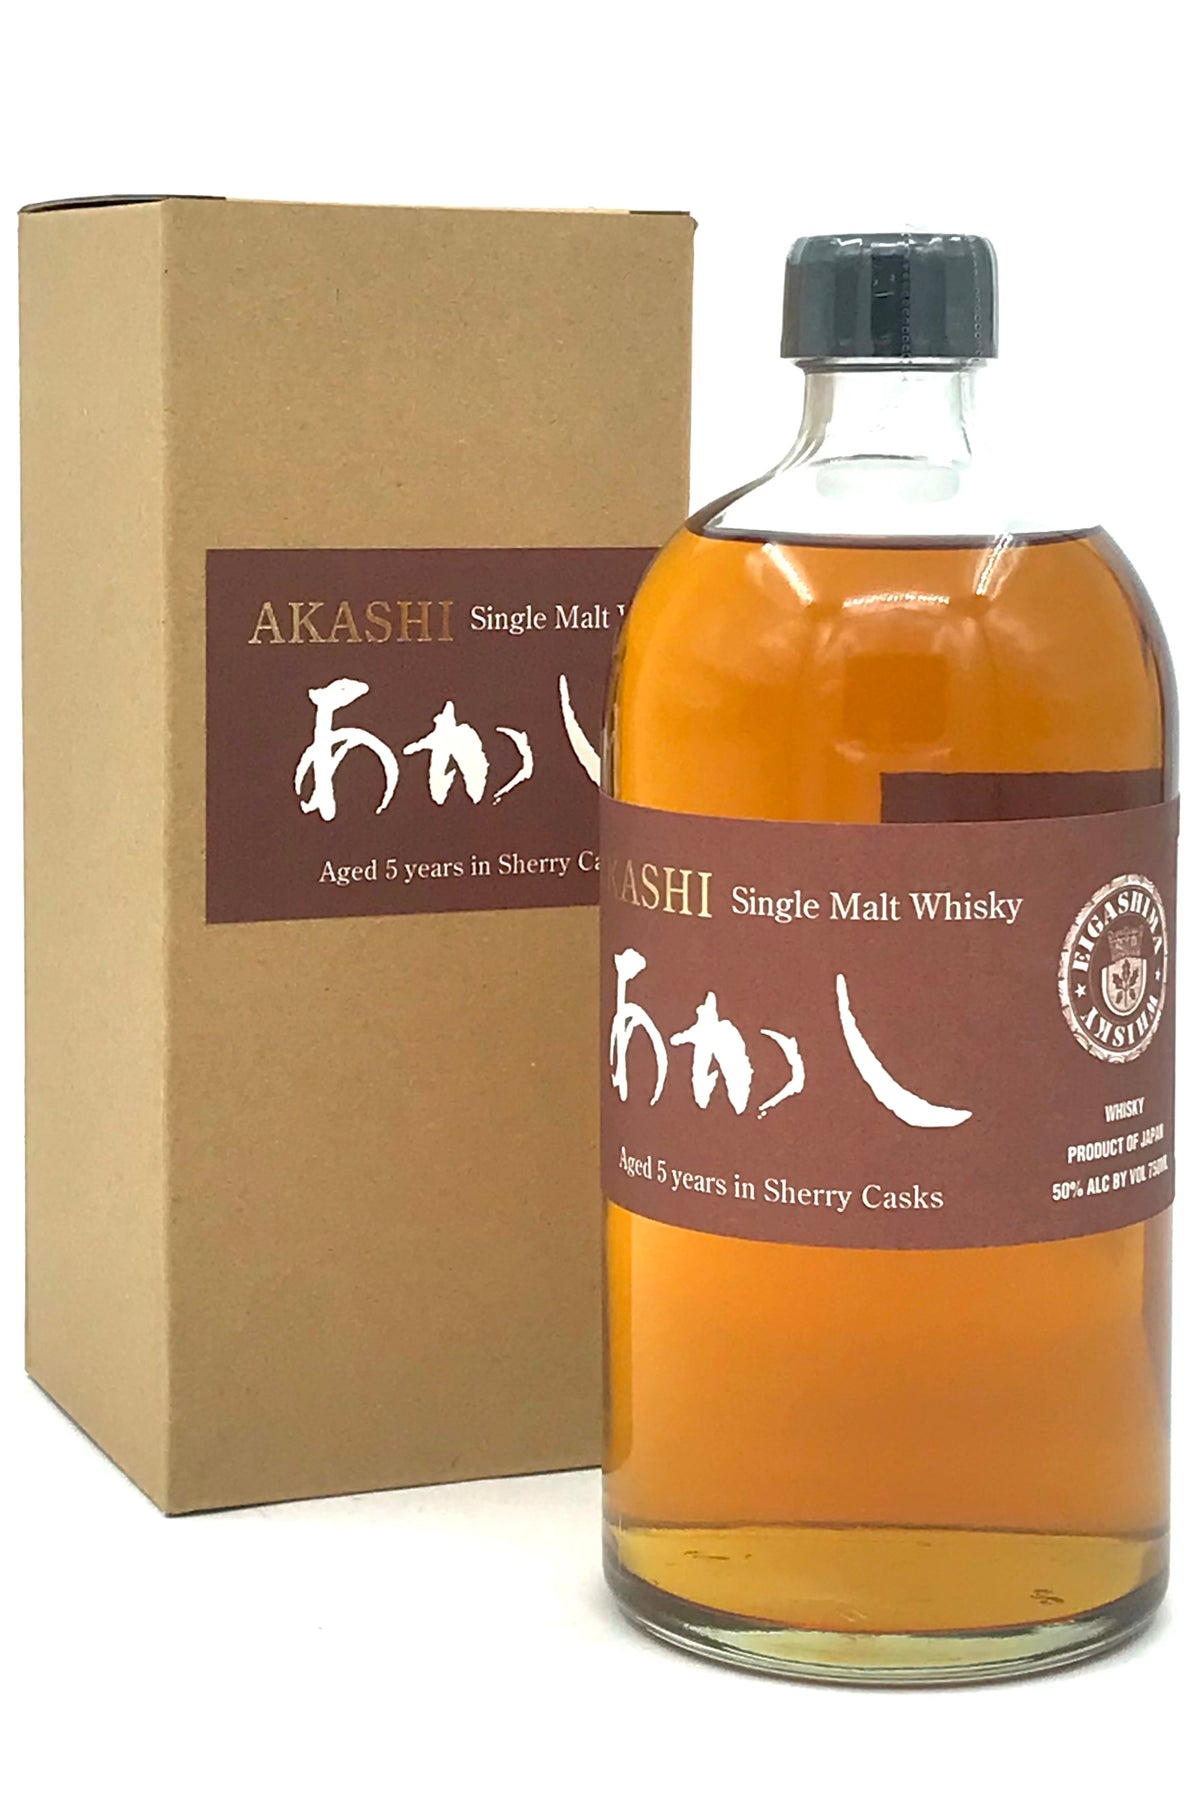 Akashi 5 Years Old Sherry Cask Single Malt Whisky